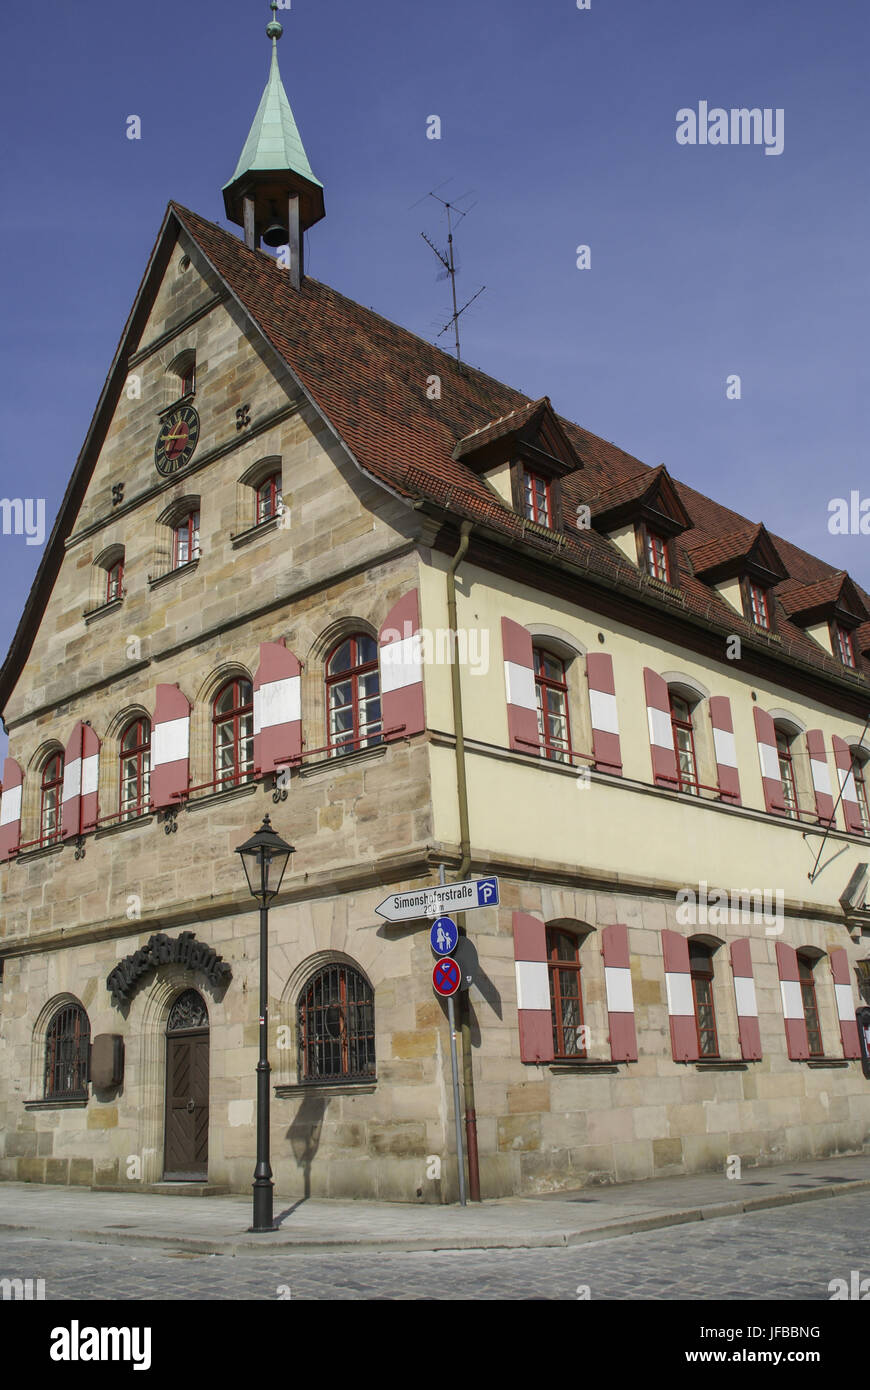 Town hall of Lauf, Germany Stock Photo - Alamy